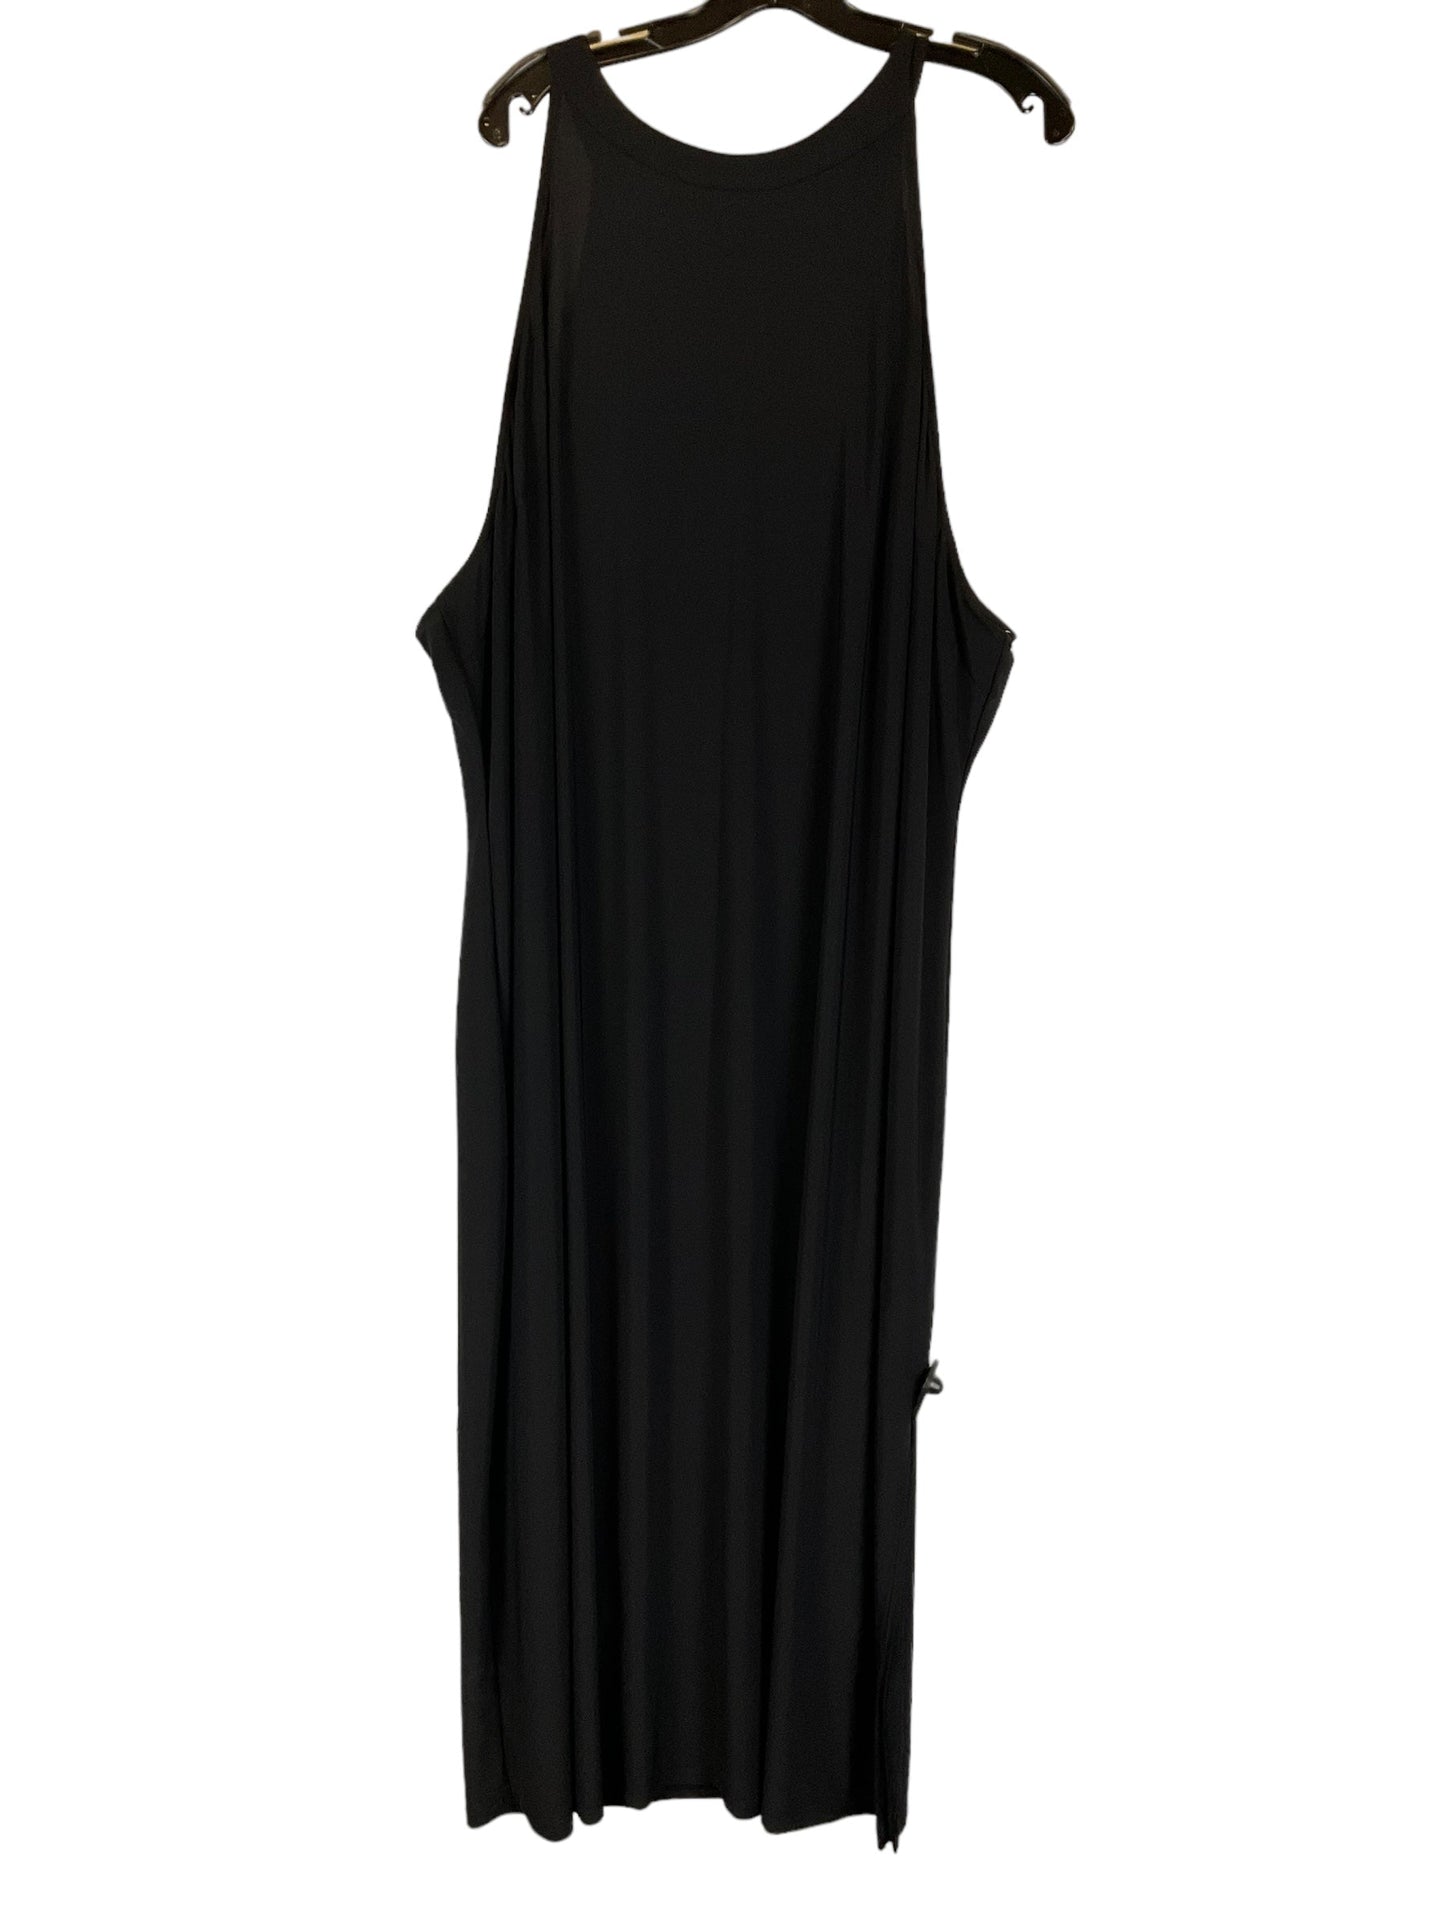 Black Dress Casual Maxi Bebe, Size 3x